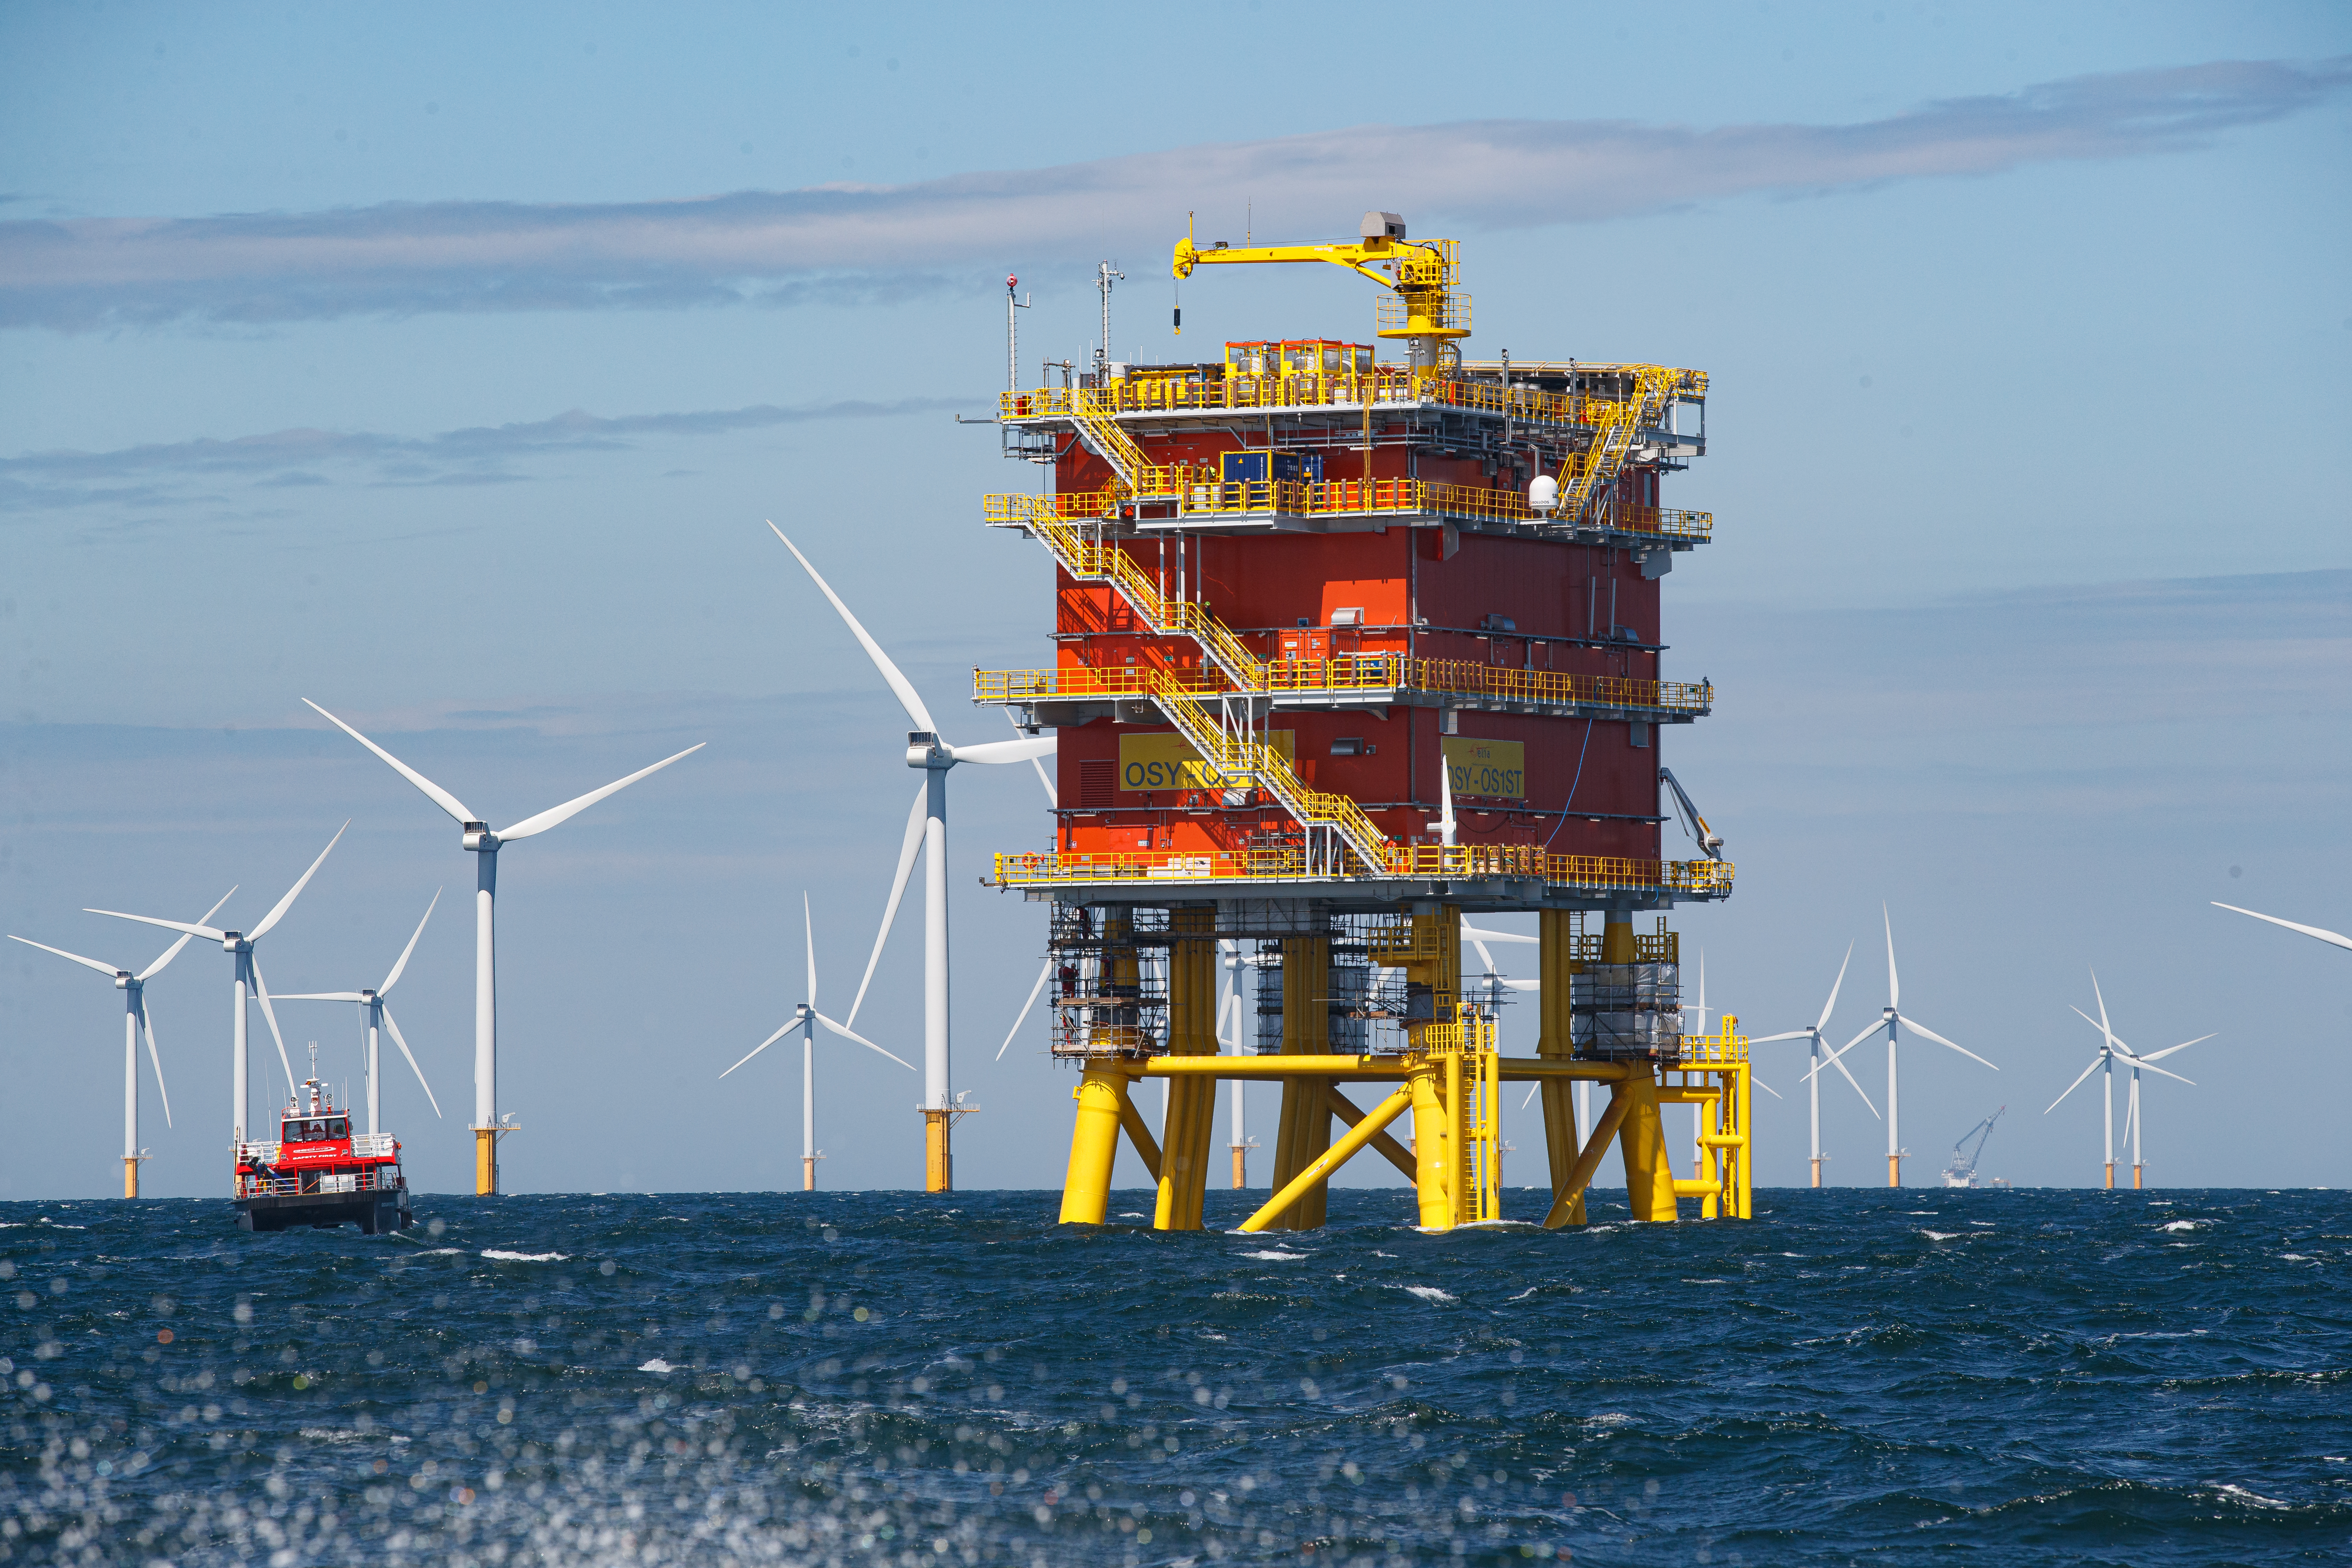 Planning Bureau: Offshore wind farms help achieve climate neutrality